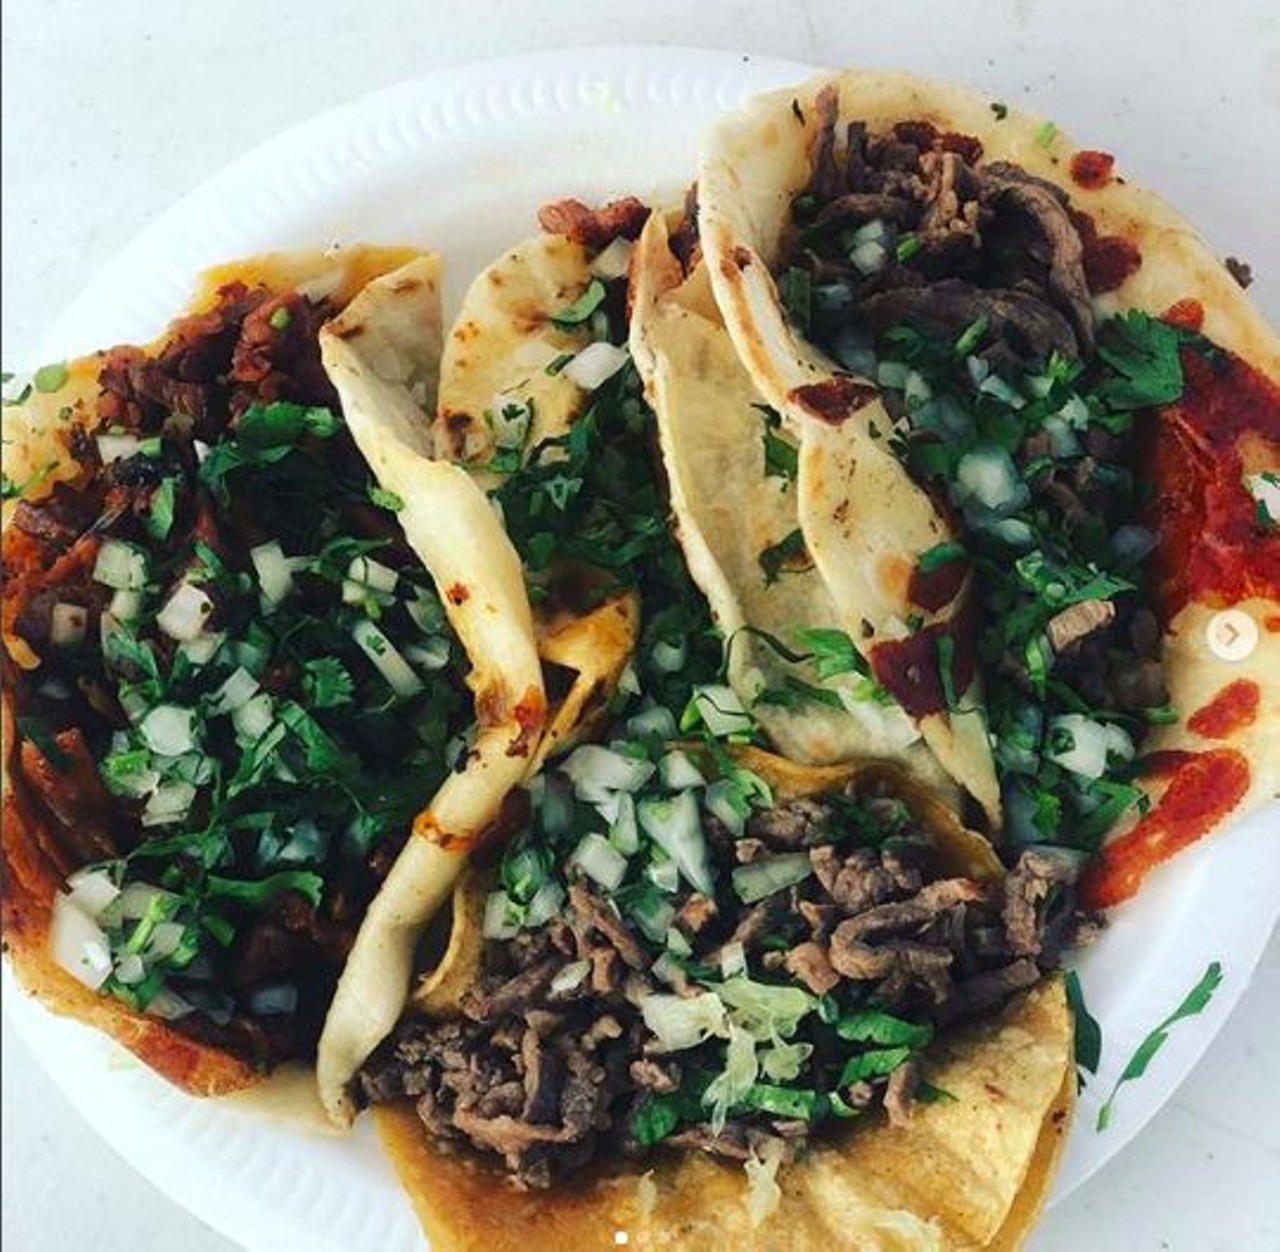 Tacos El Caballo
1445 Springwells St, Detroit, MI 48209
Photo courtesy of @ollie_cole8